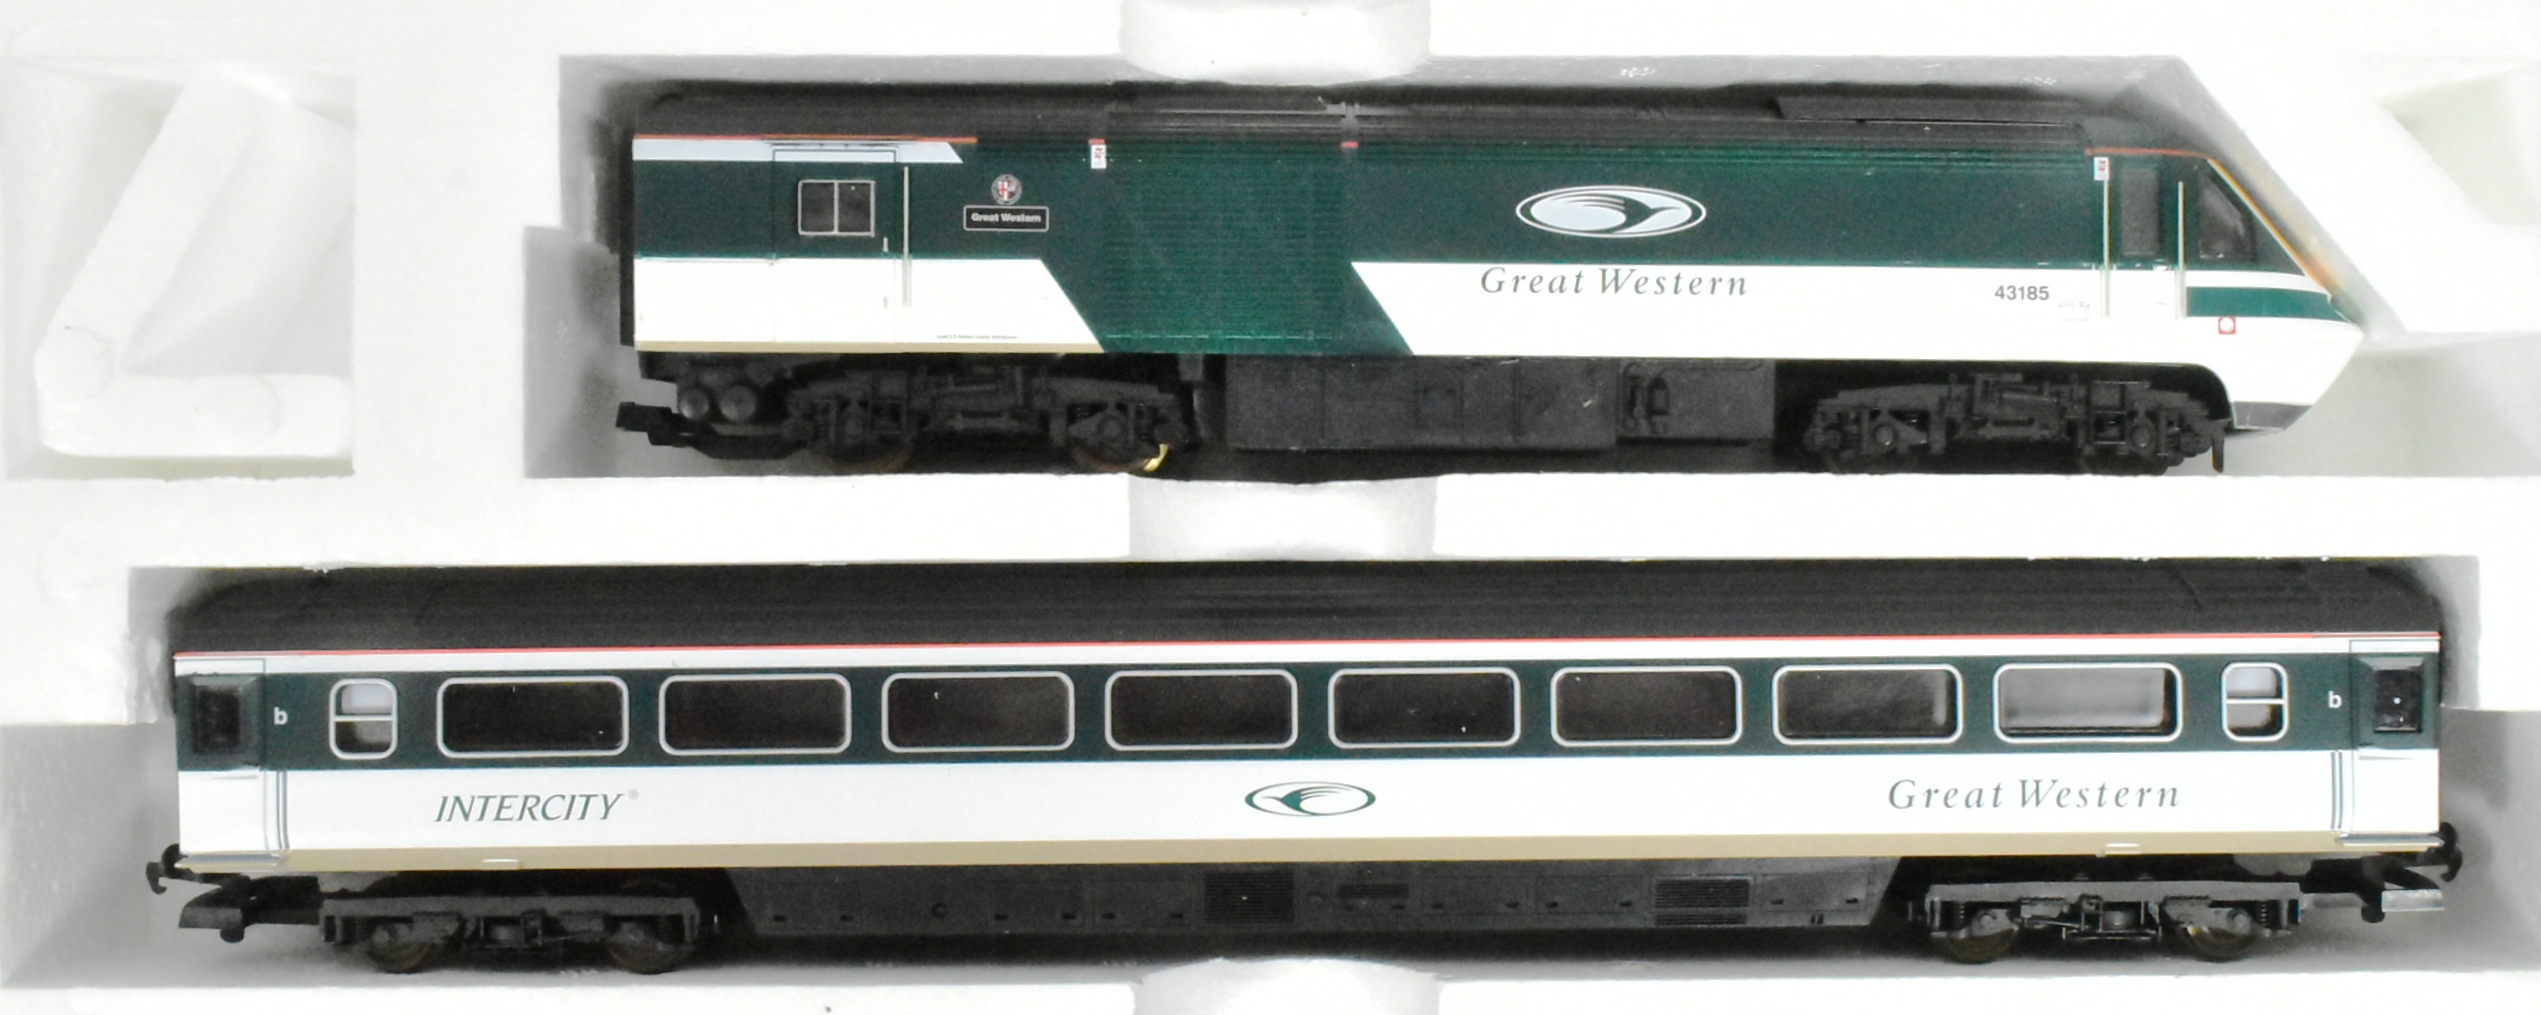 MODEL RAILWAY - LIMA OO GAUGE GREAT WESTERN TRAINSET - Image 2 of 3